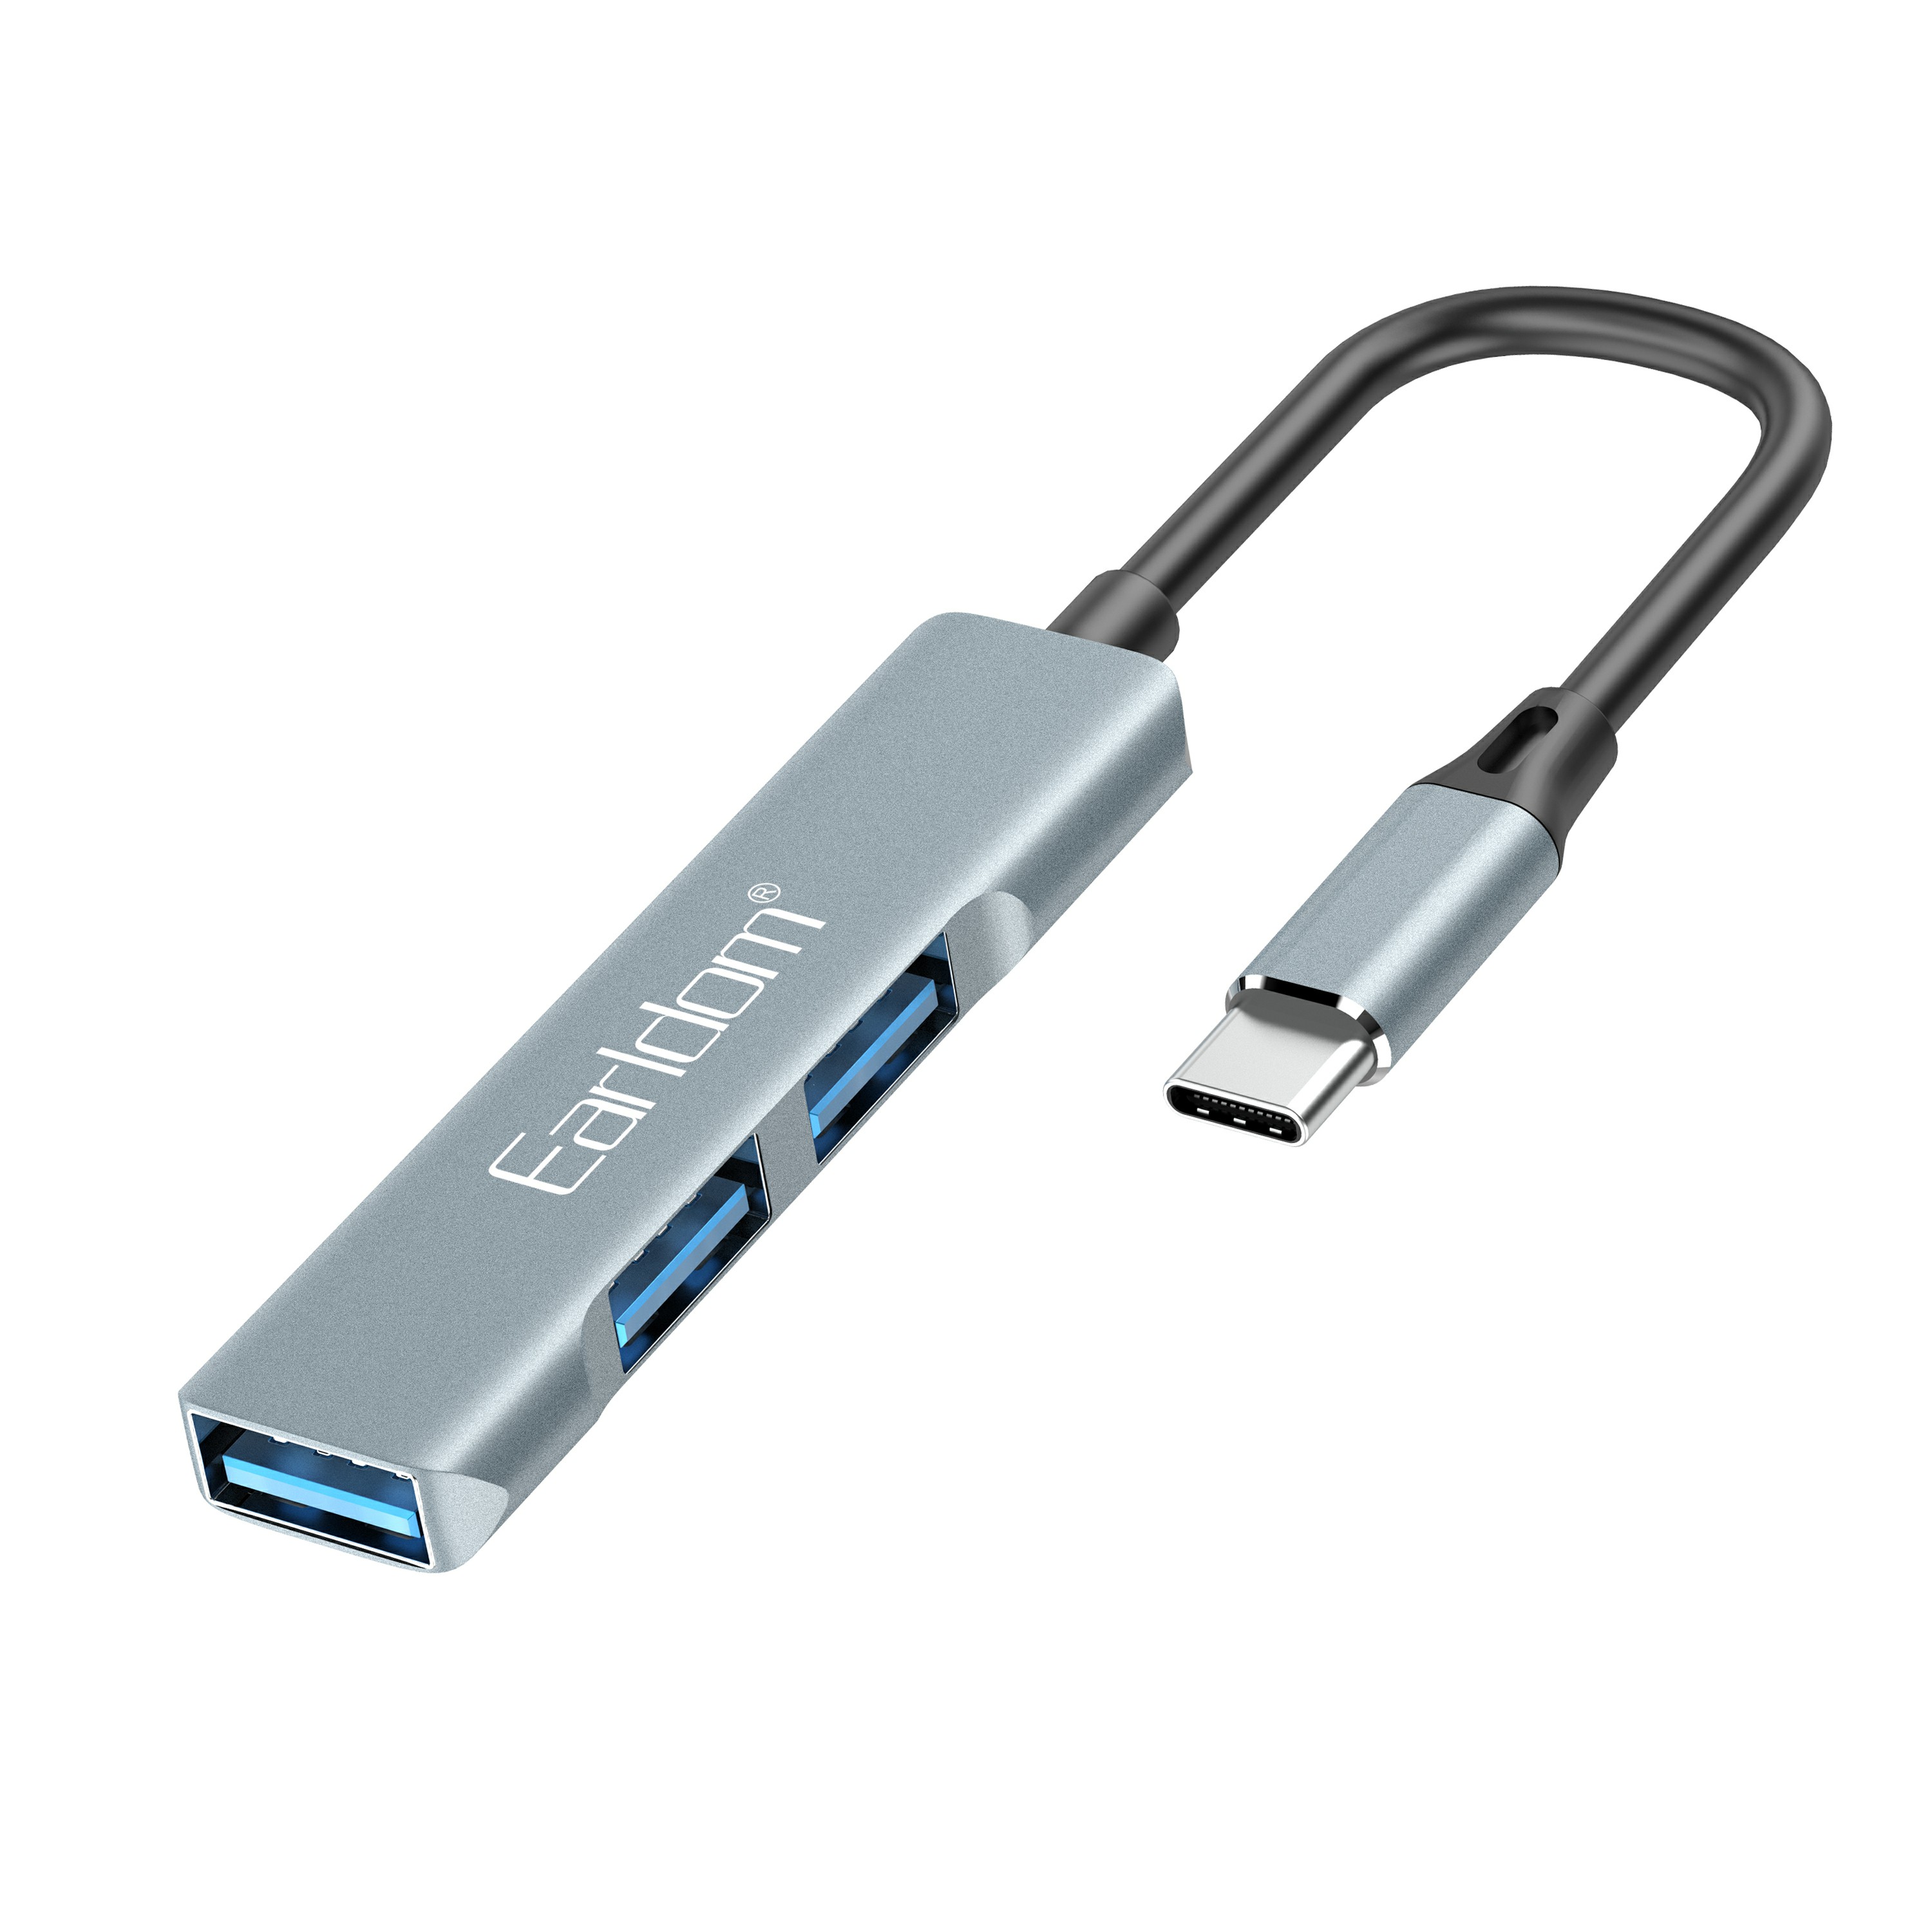 Earldom Type C USB Hub 3 Port mit USB3.0 * 1 + USB2.0 * 2 3Port für Laptop PC Computer Handy